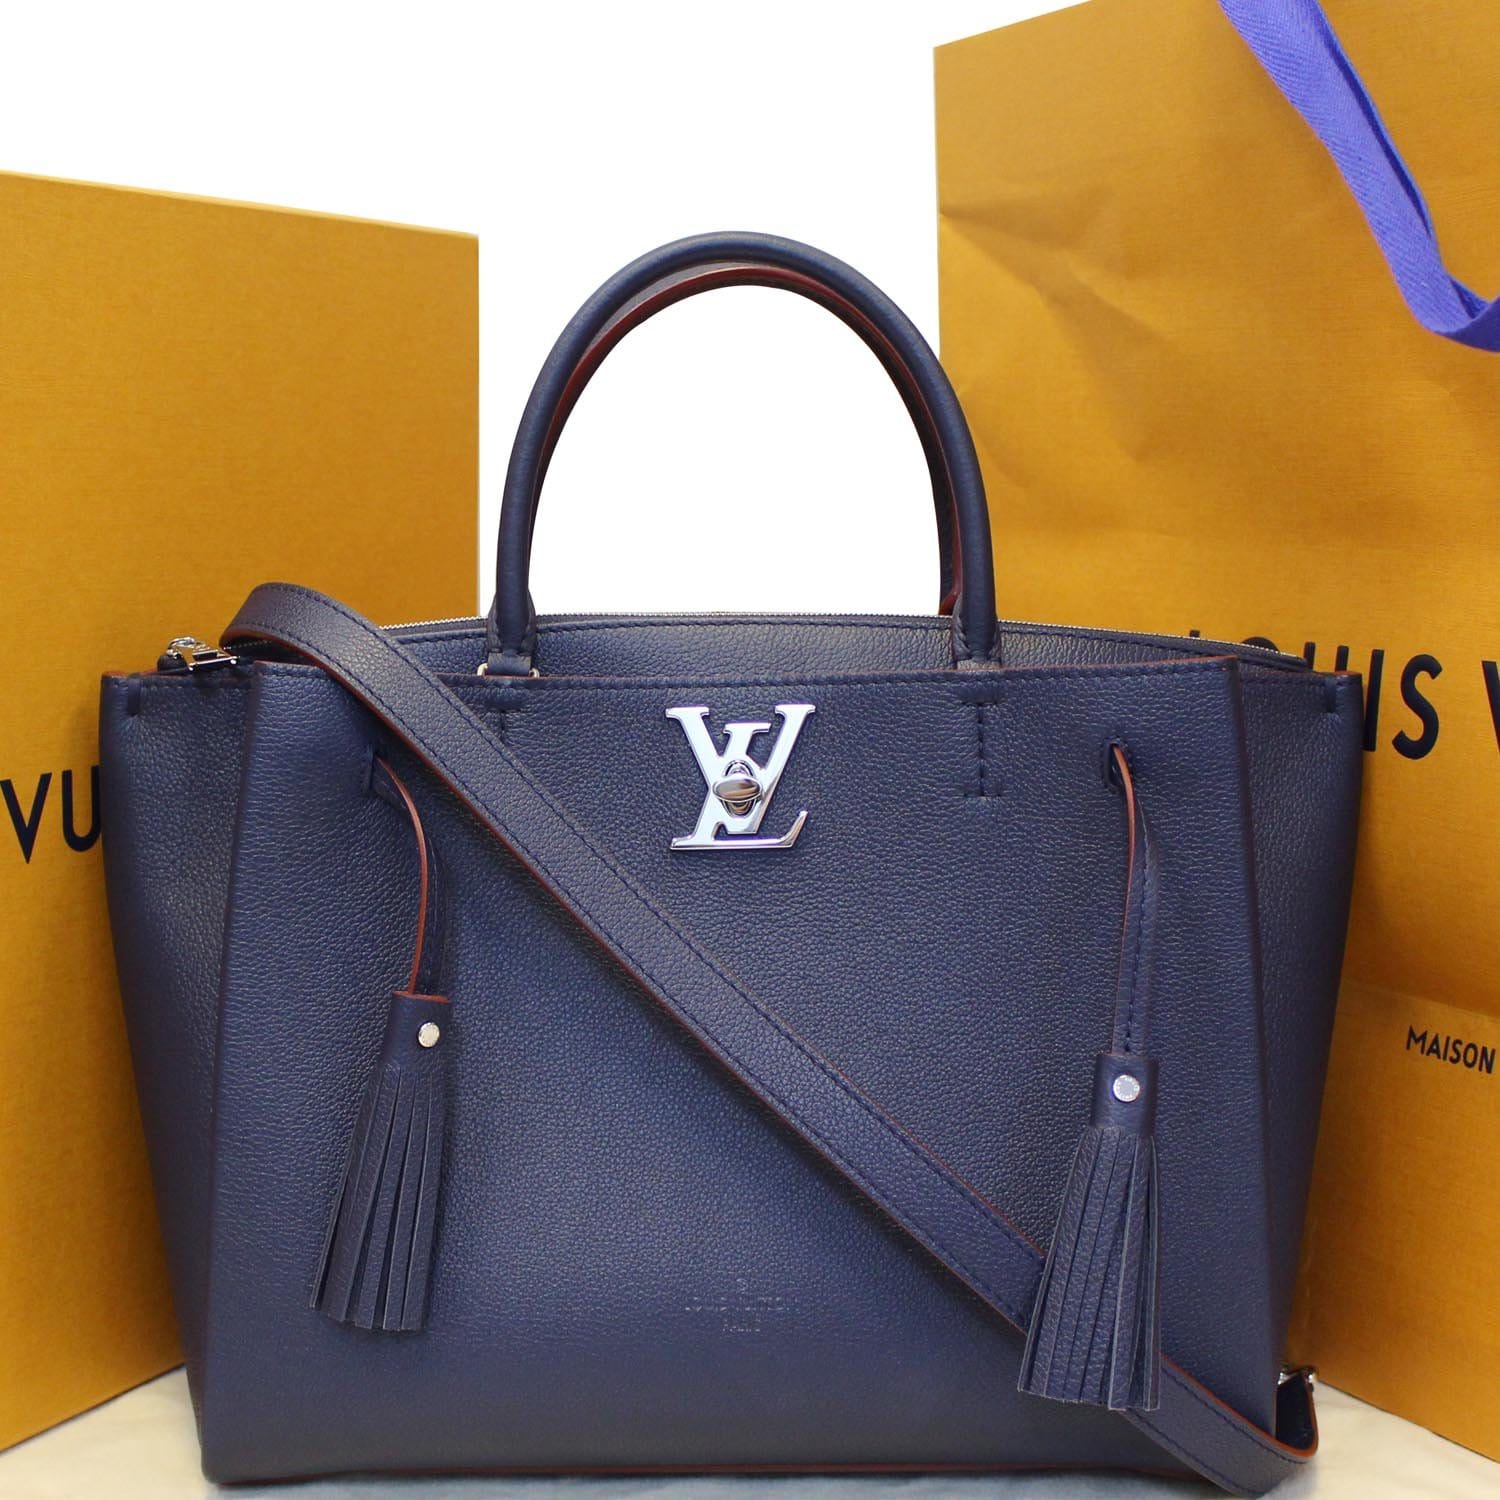 Louis Vuitton Marine Bags & Handbags for Women